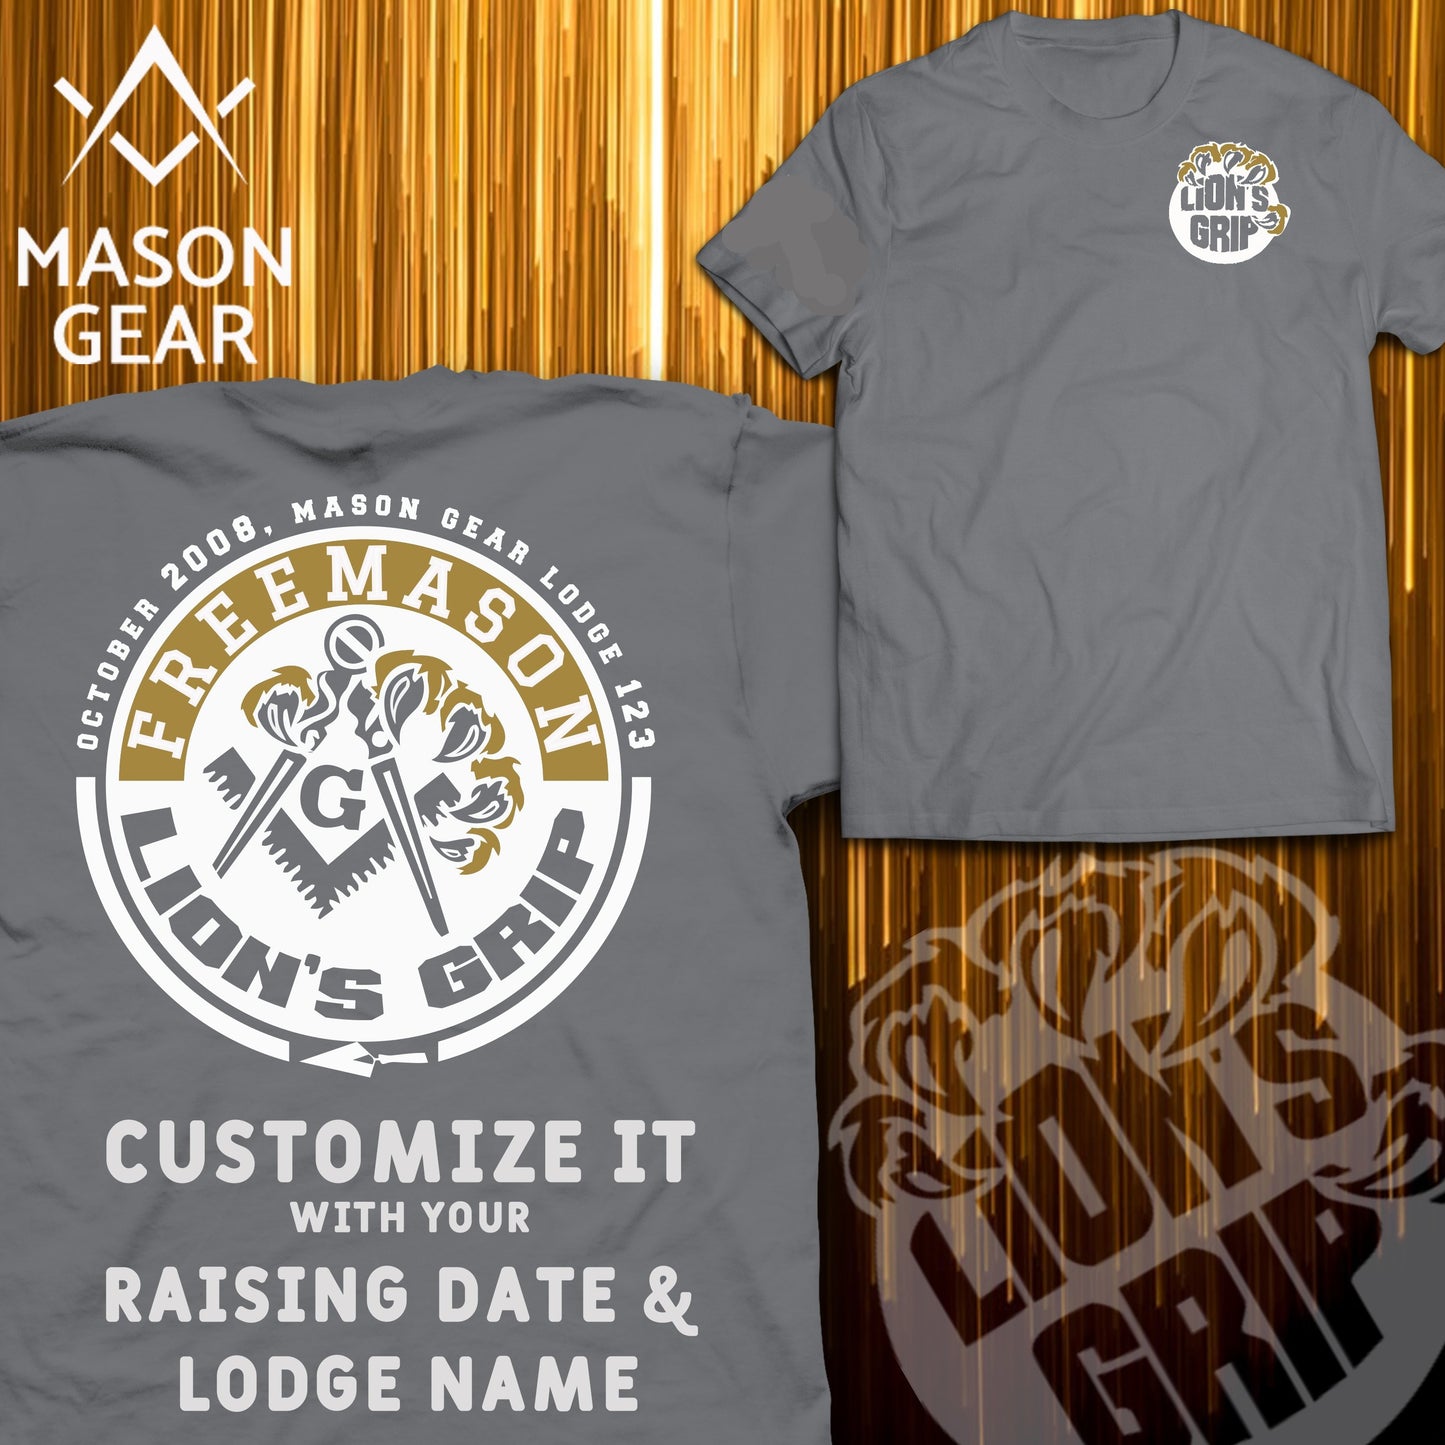 LION'S GRIP t-shirt 2.0  - Print your Raising date & Lodge name